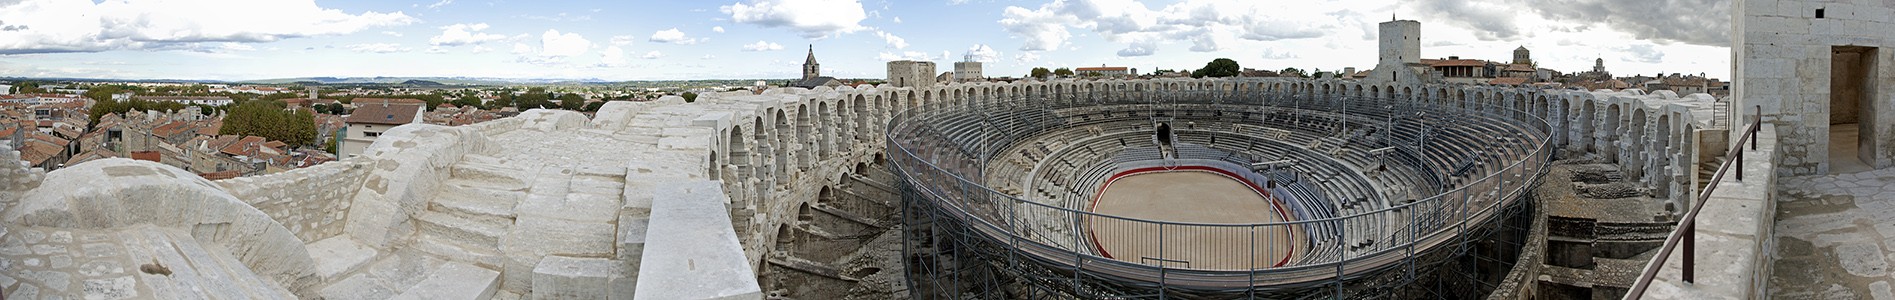 Amphitheater (Arènes d'Arles)